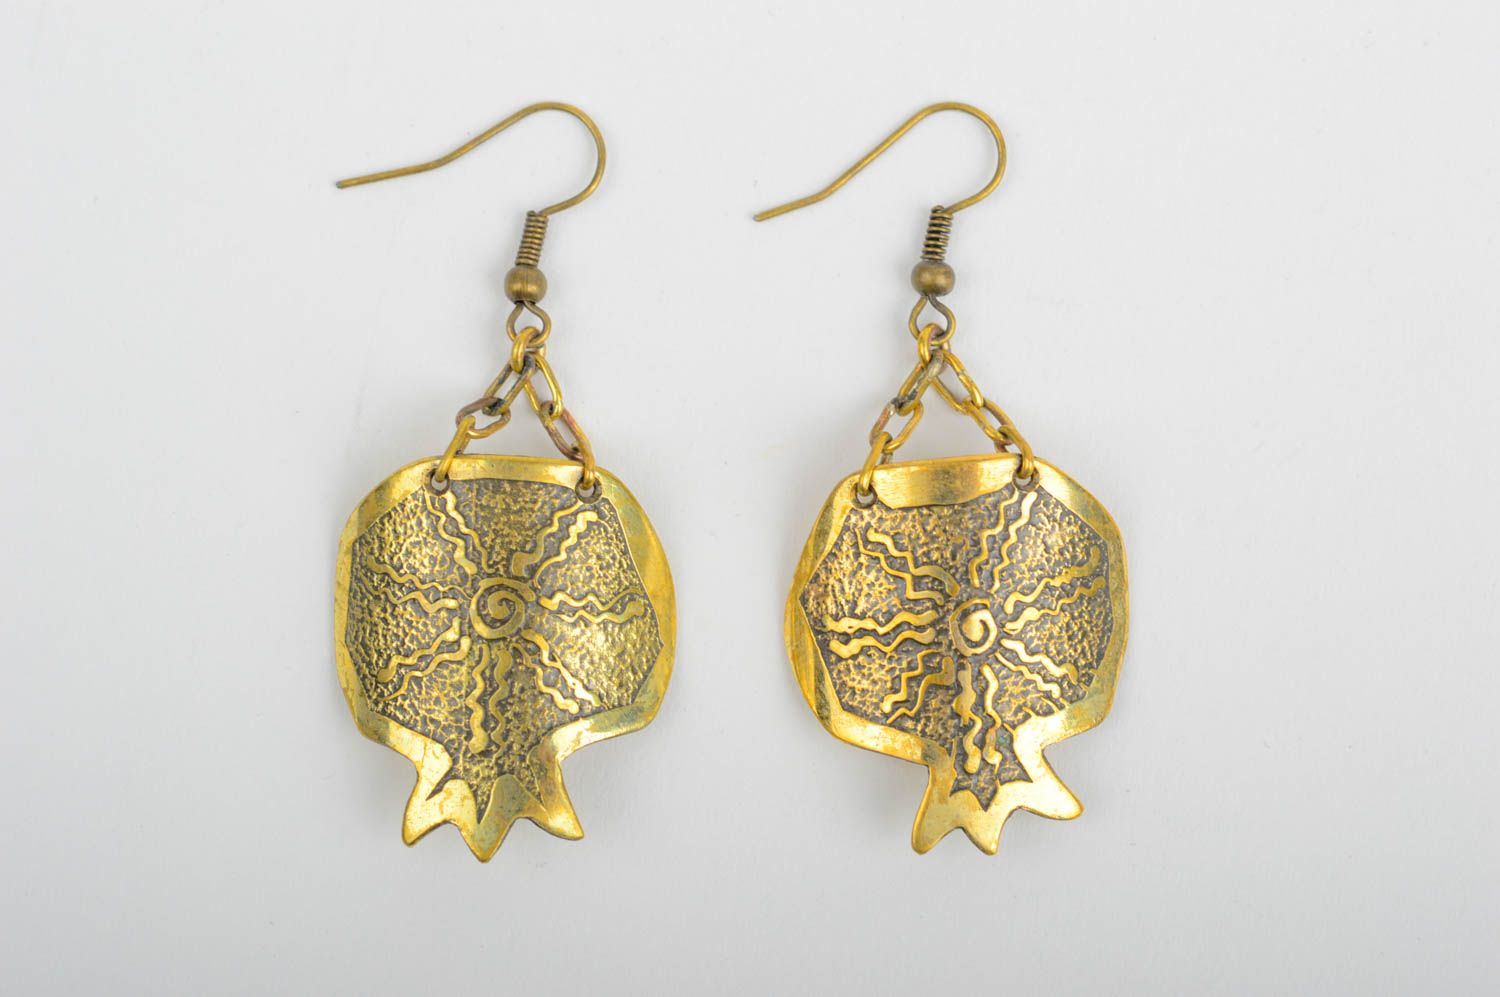 Handmade brass earrings designer accessories for women brass stylish jewelry photo 1